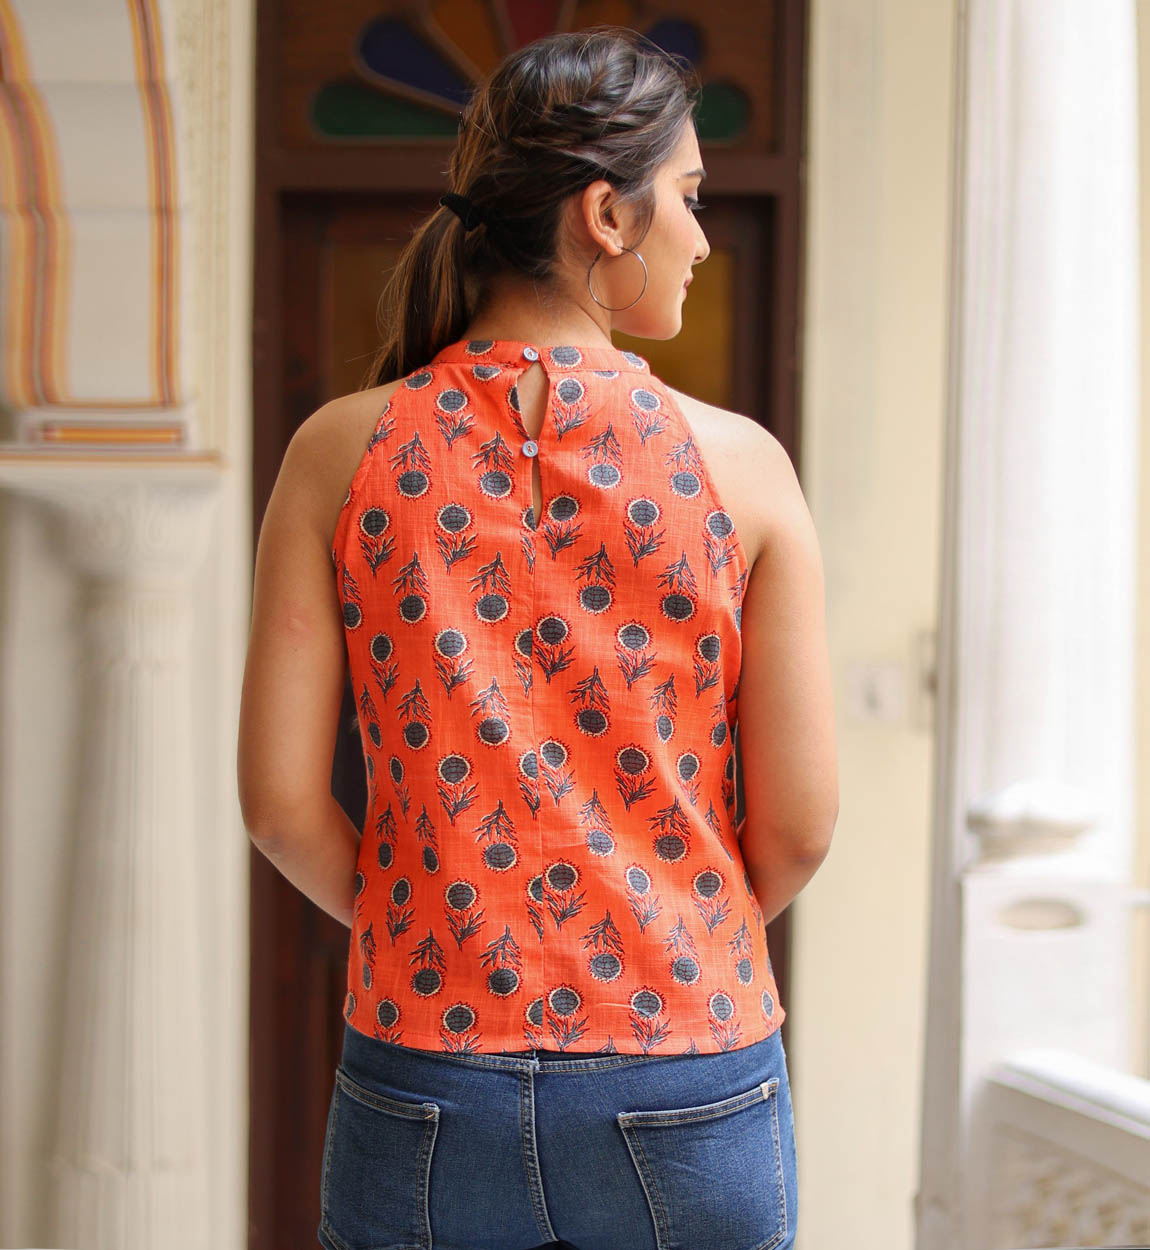 Yash Gallery Women's Floral Printed Hot Neck Regular Top